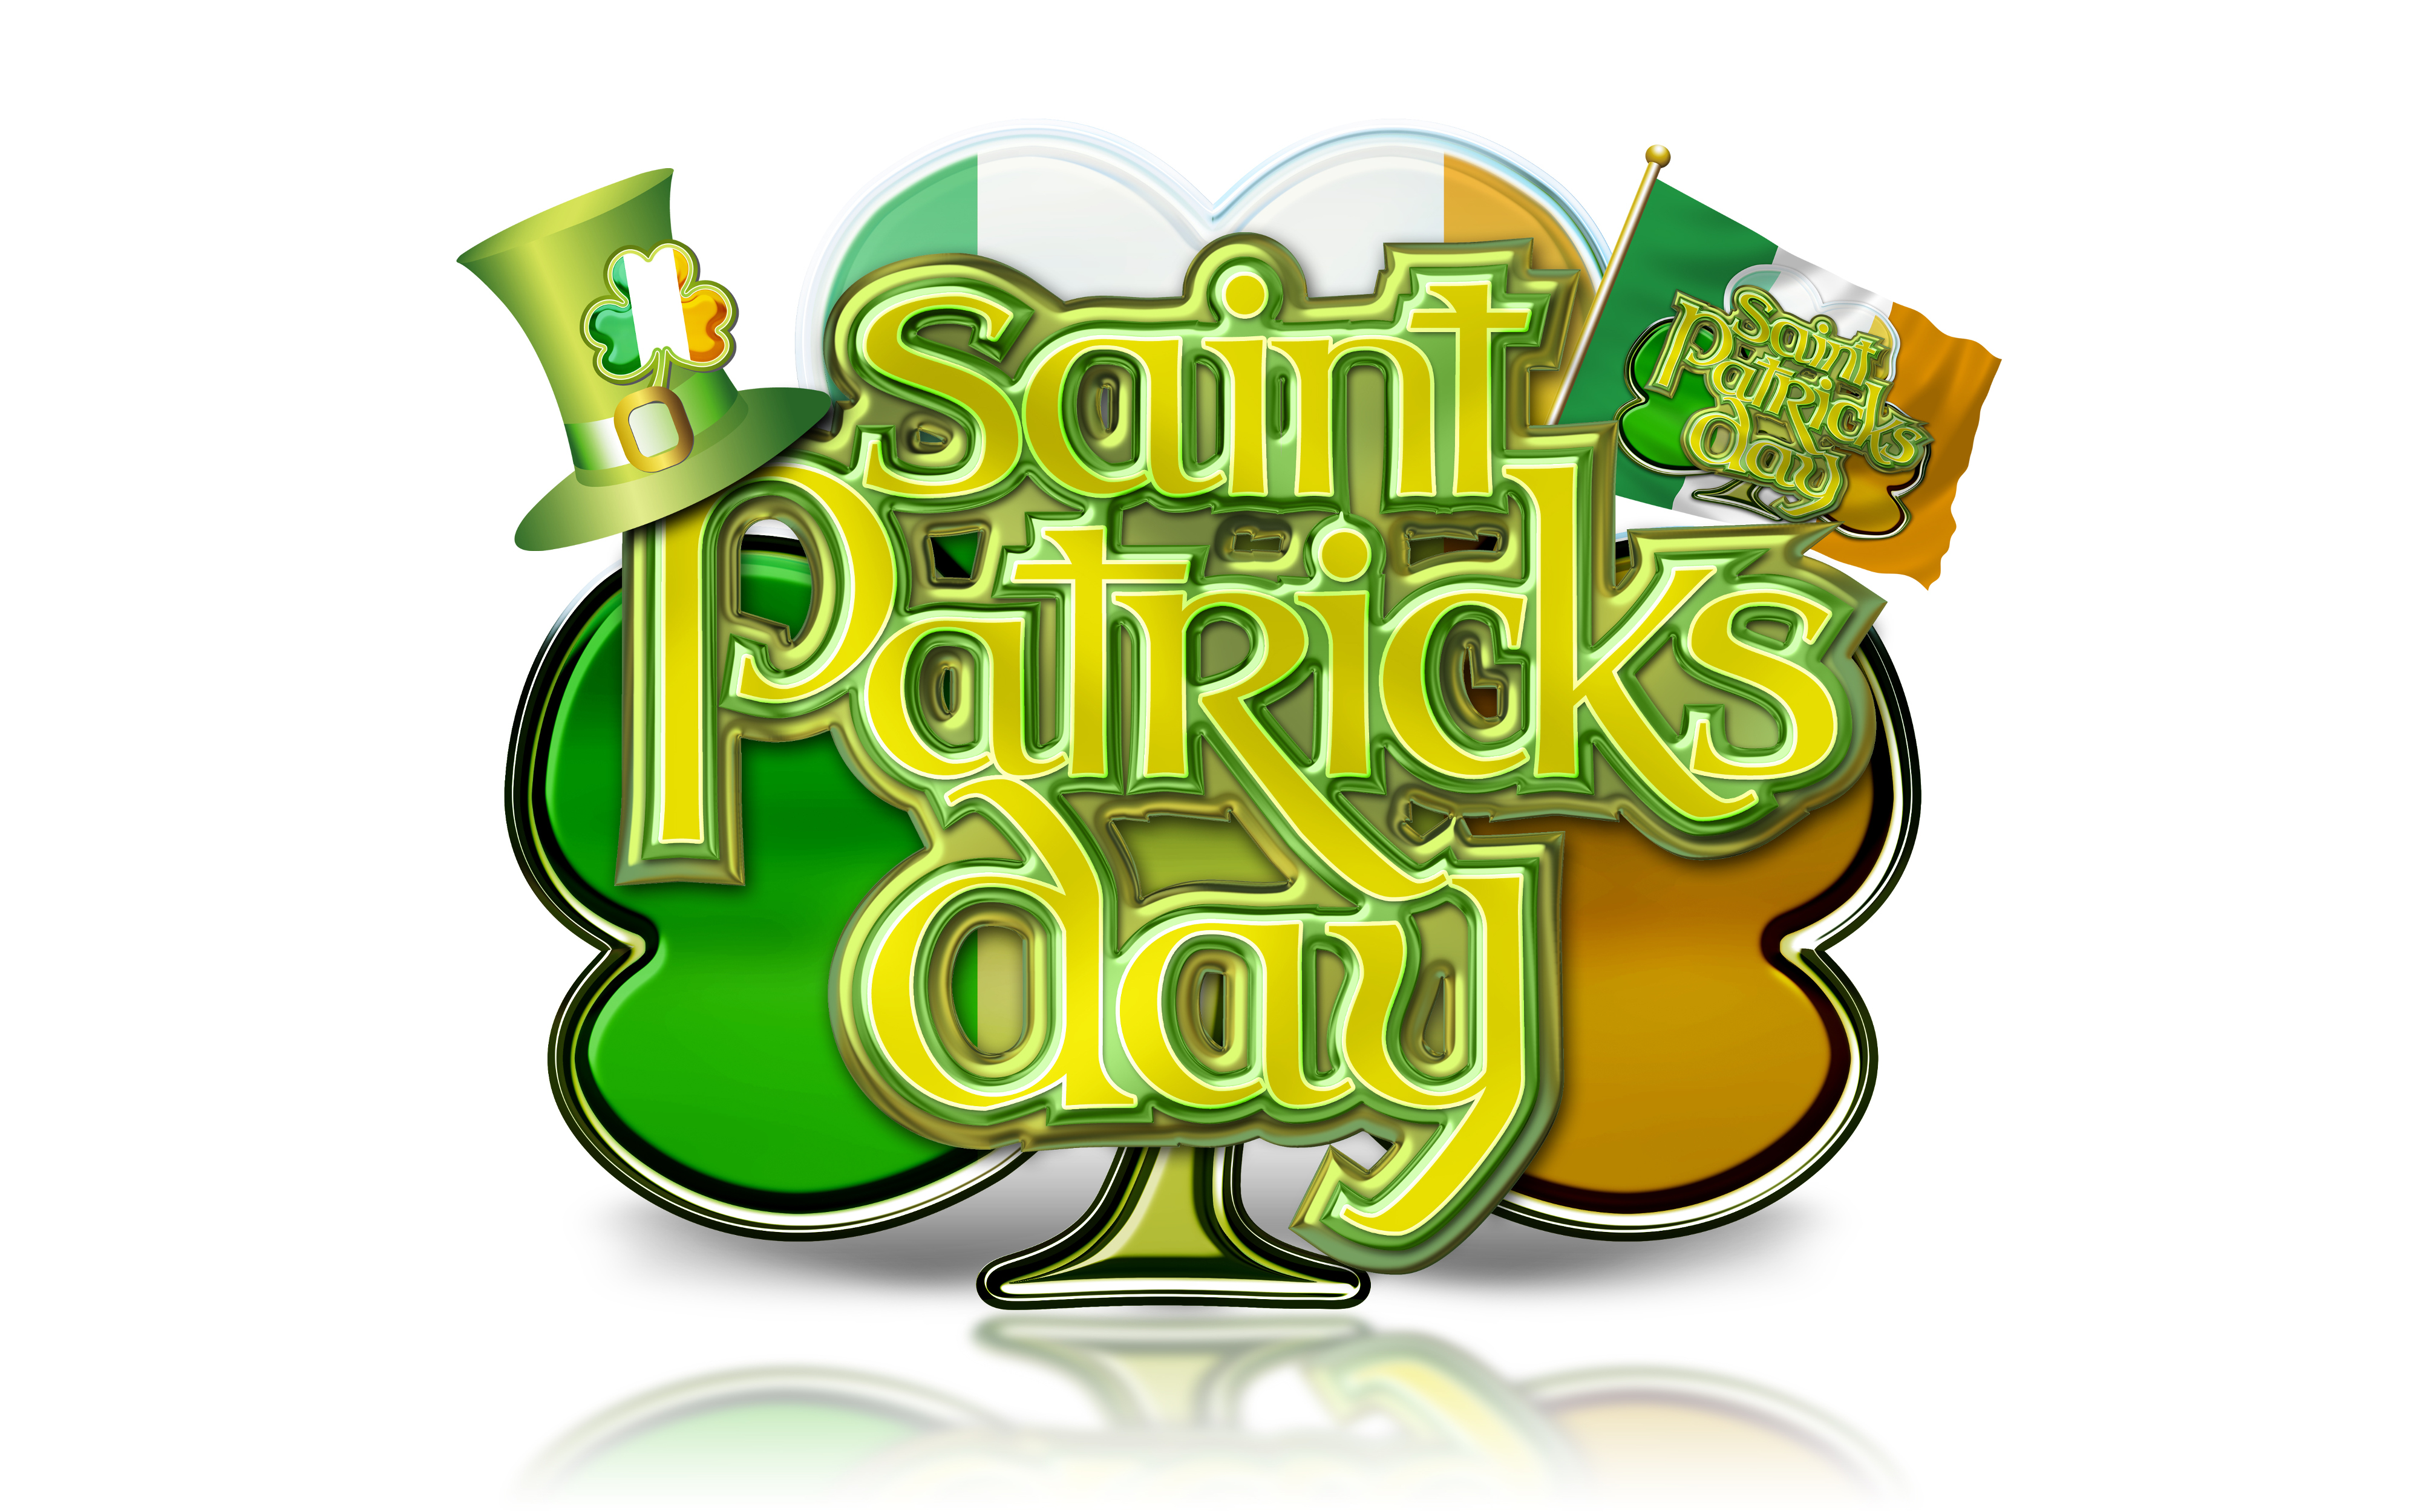 St Patricks Day Clover Flag Of Ireland 4000x2500.